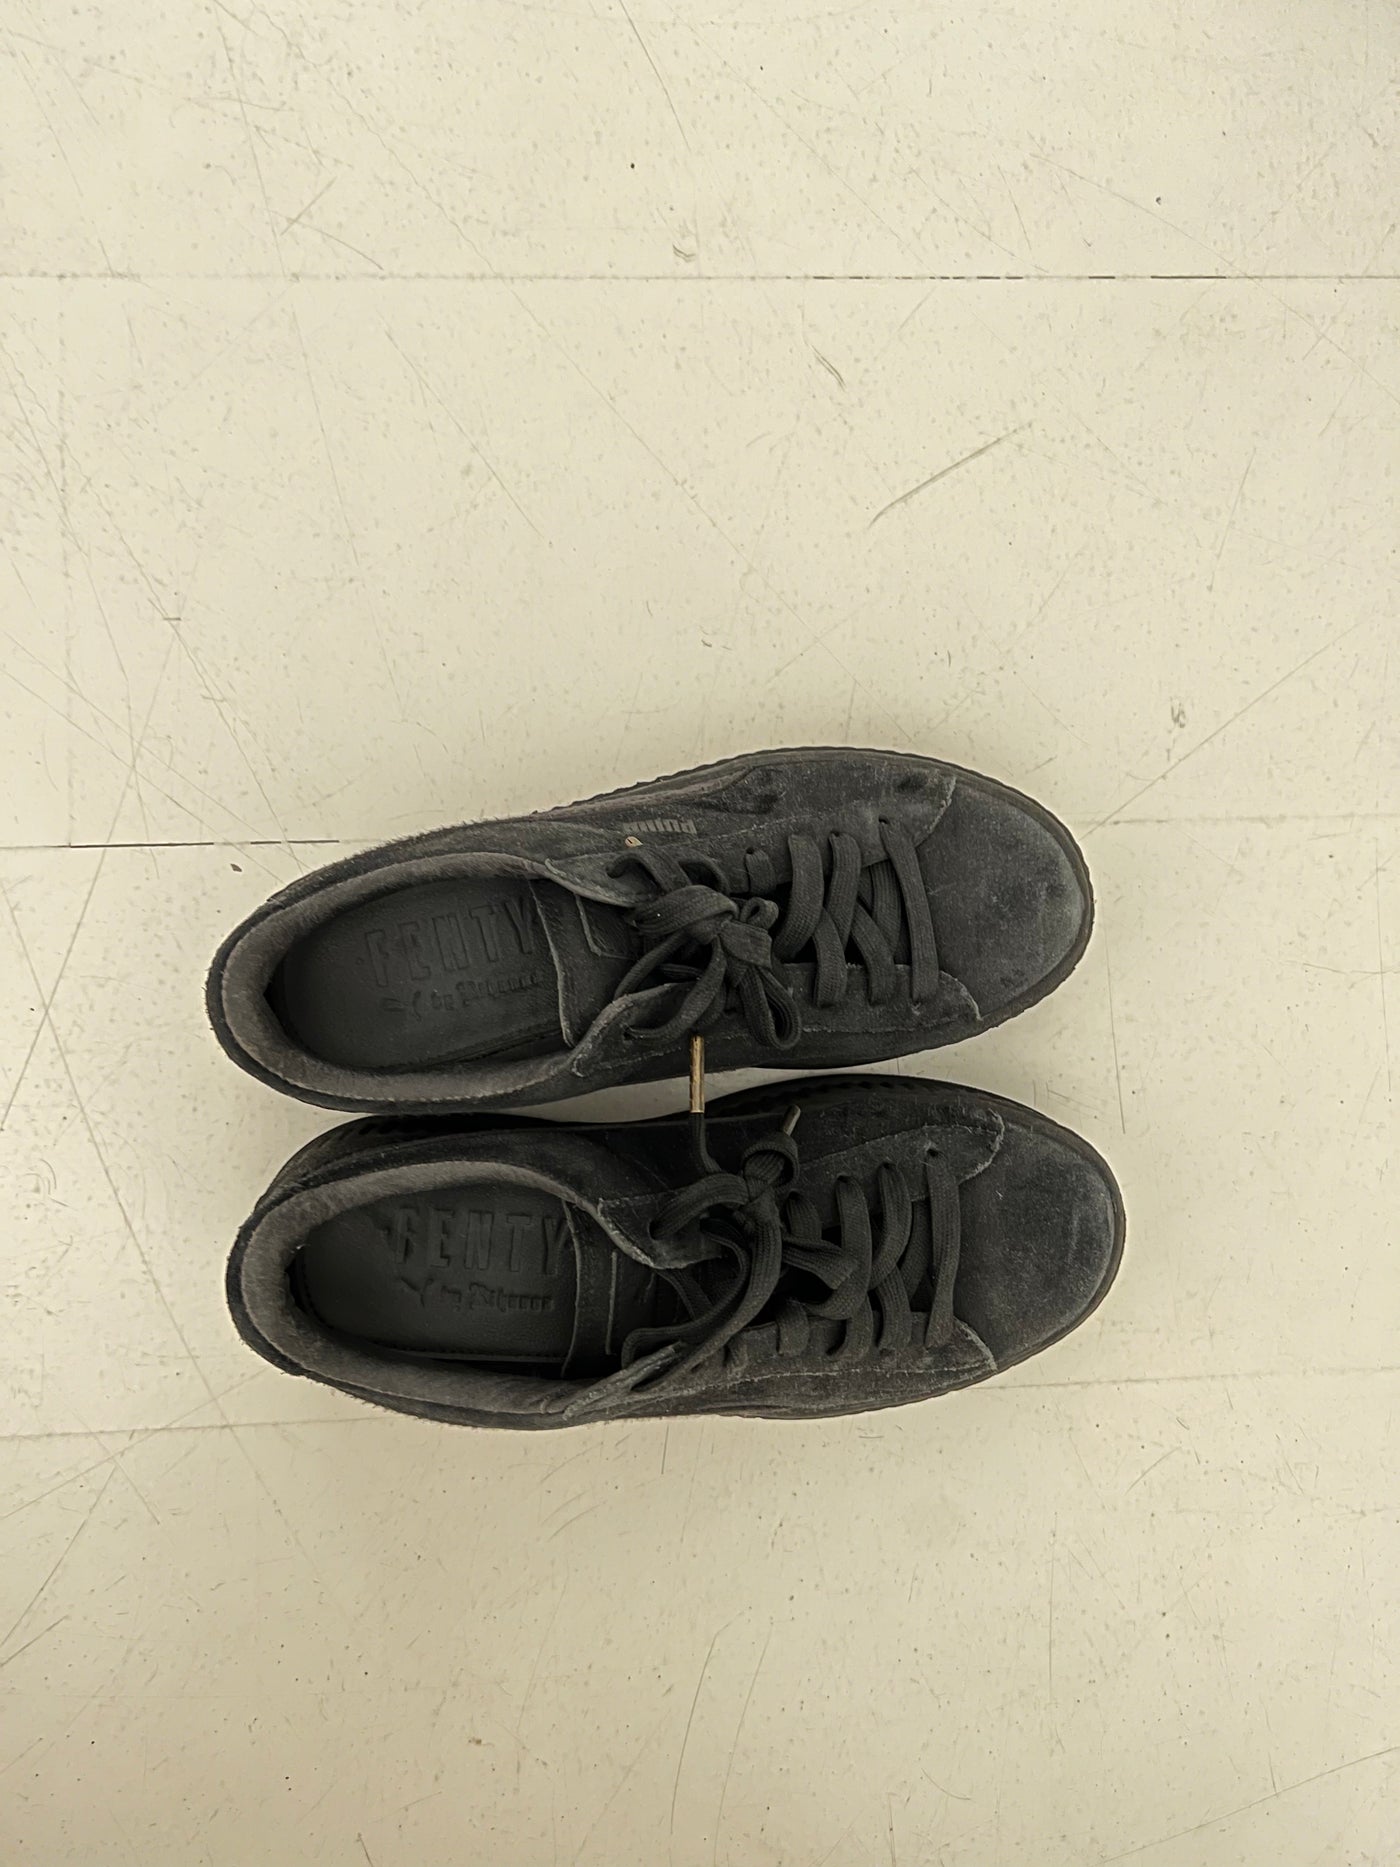 Zapatos negros con plataforma